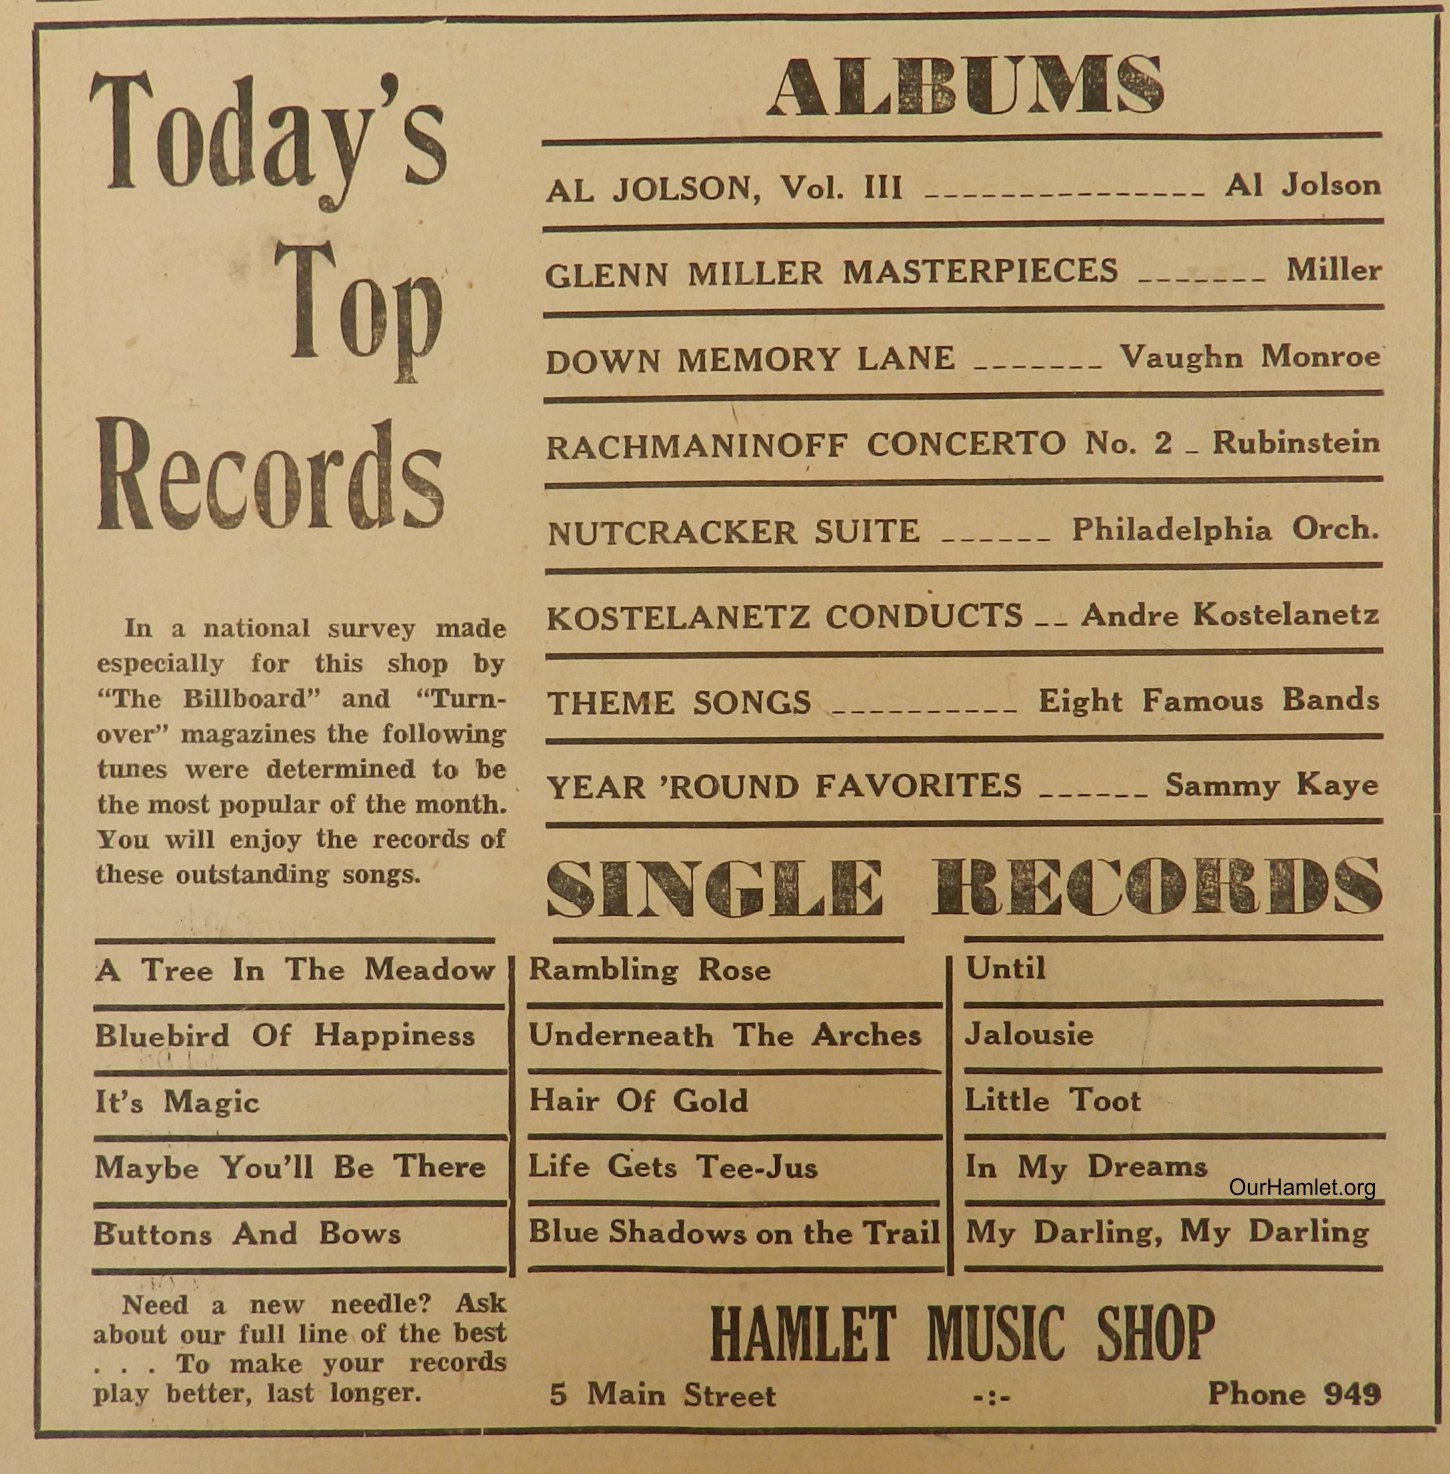 1948 Hamlet Music Shop OH.jpg